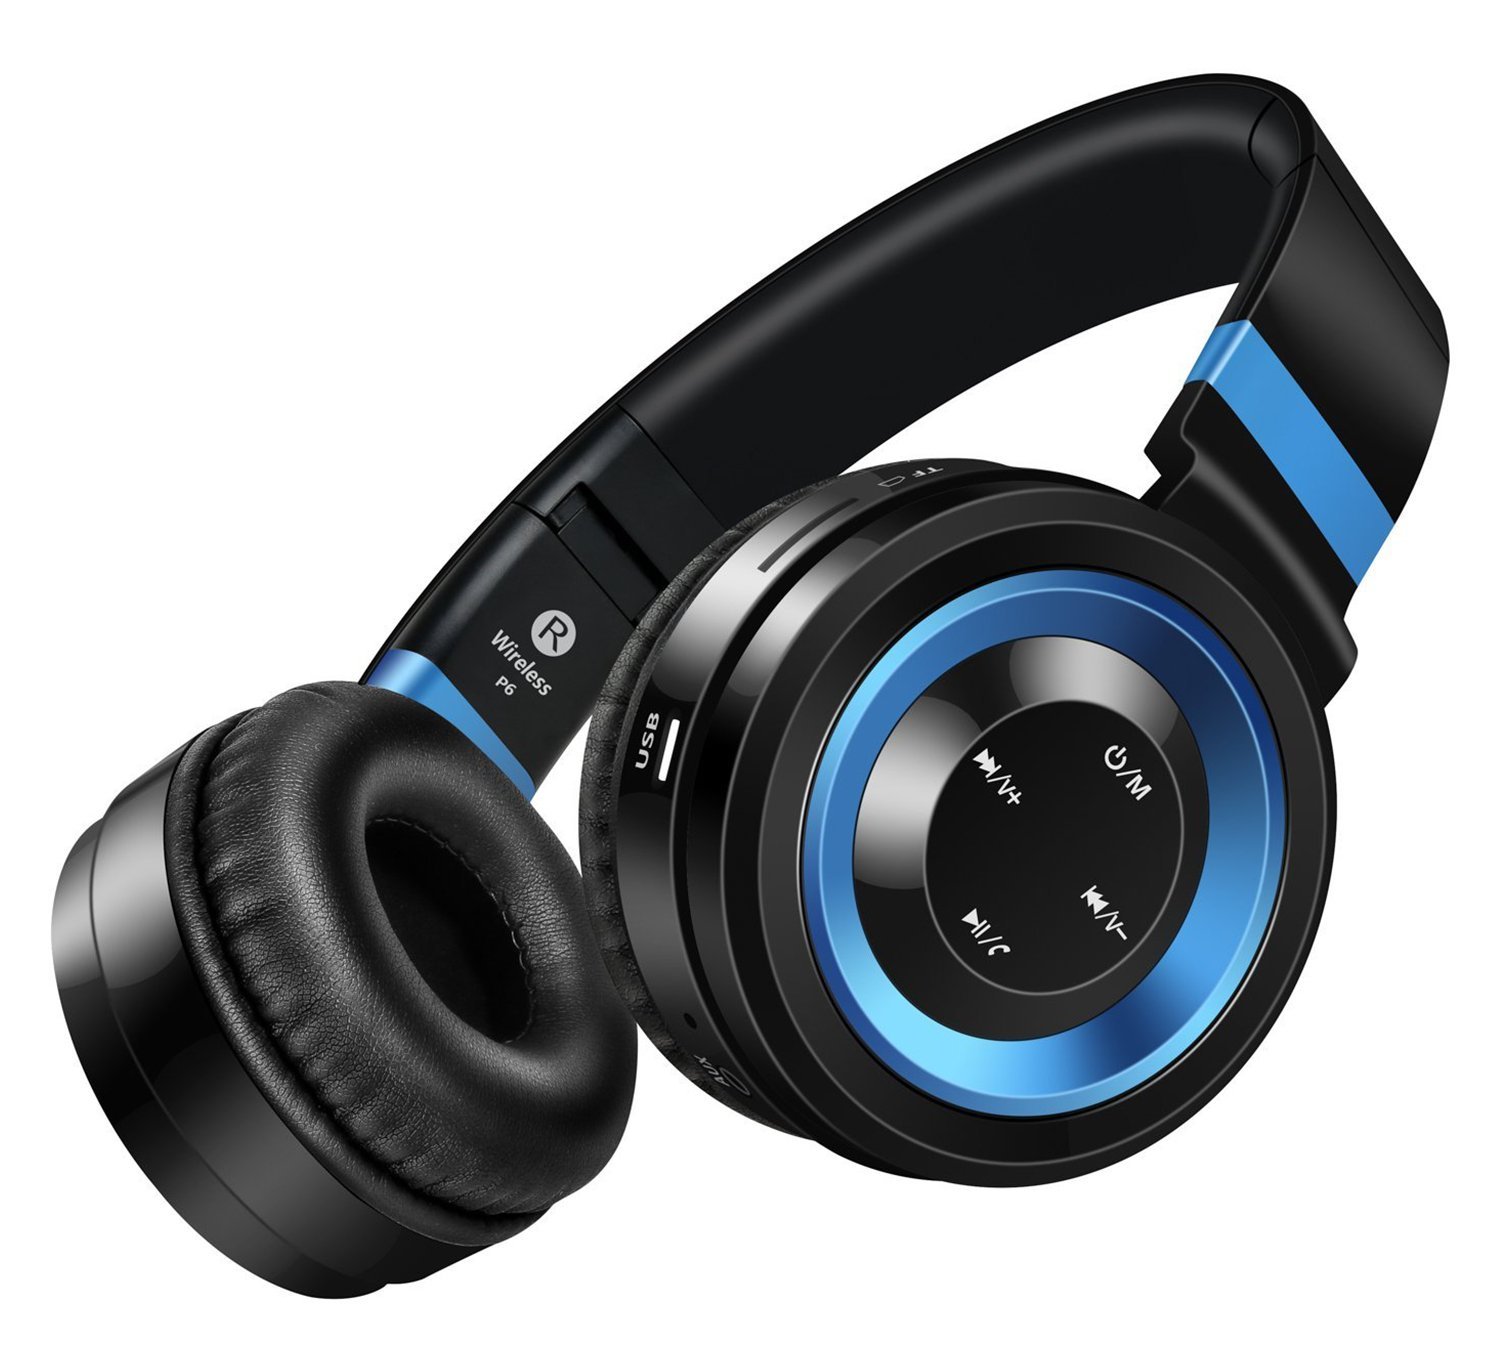 Honstek P6 senza fili Bluetooth 4.0 Cuffie Stereo, offerte Amazon